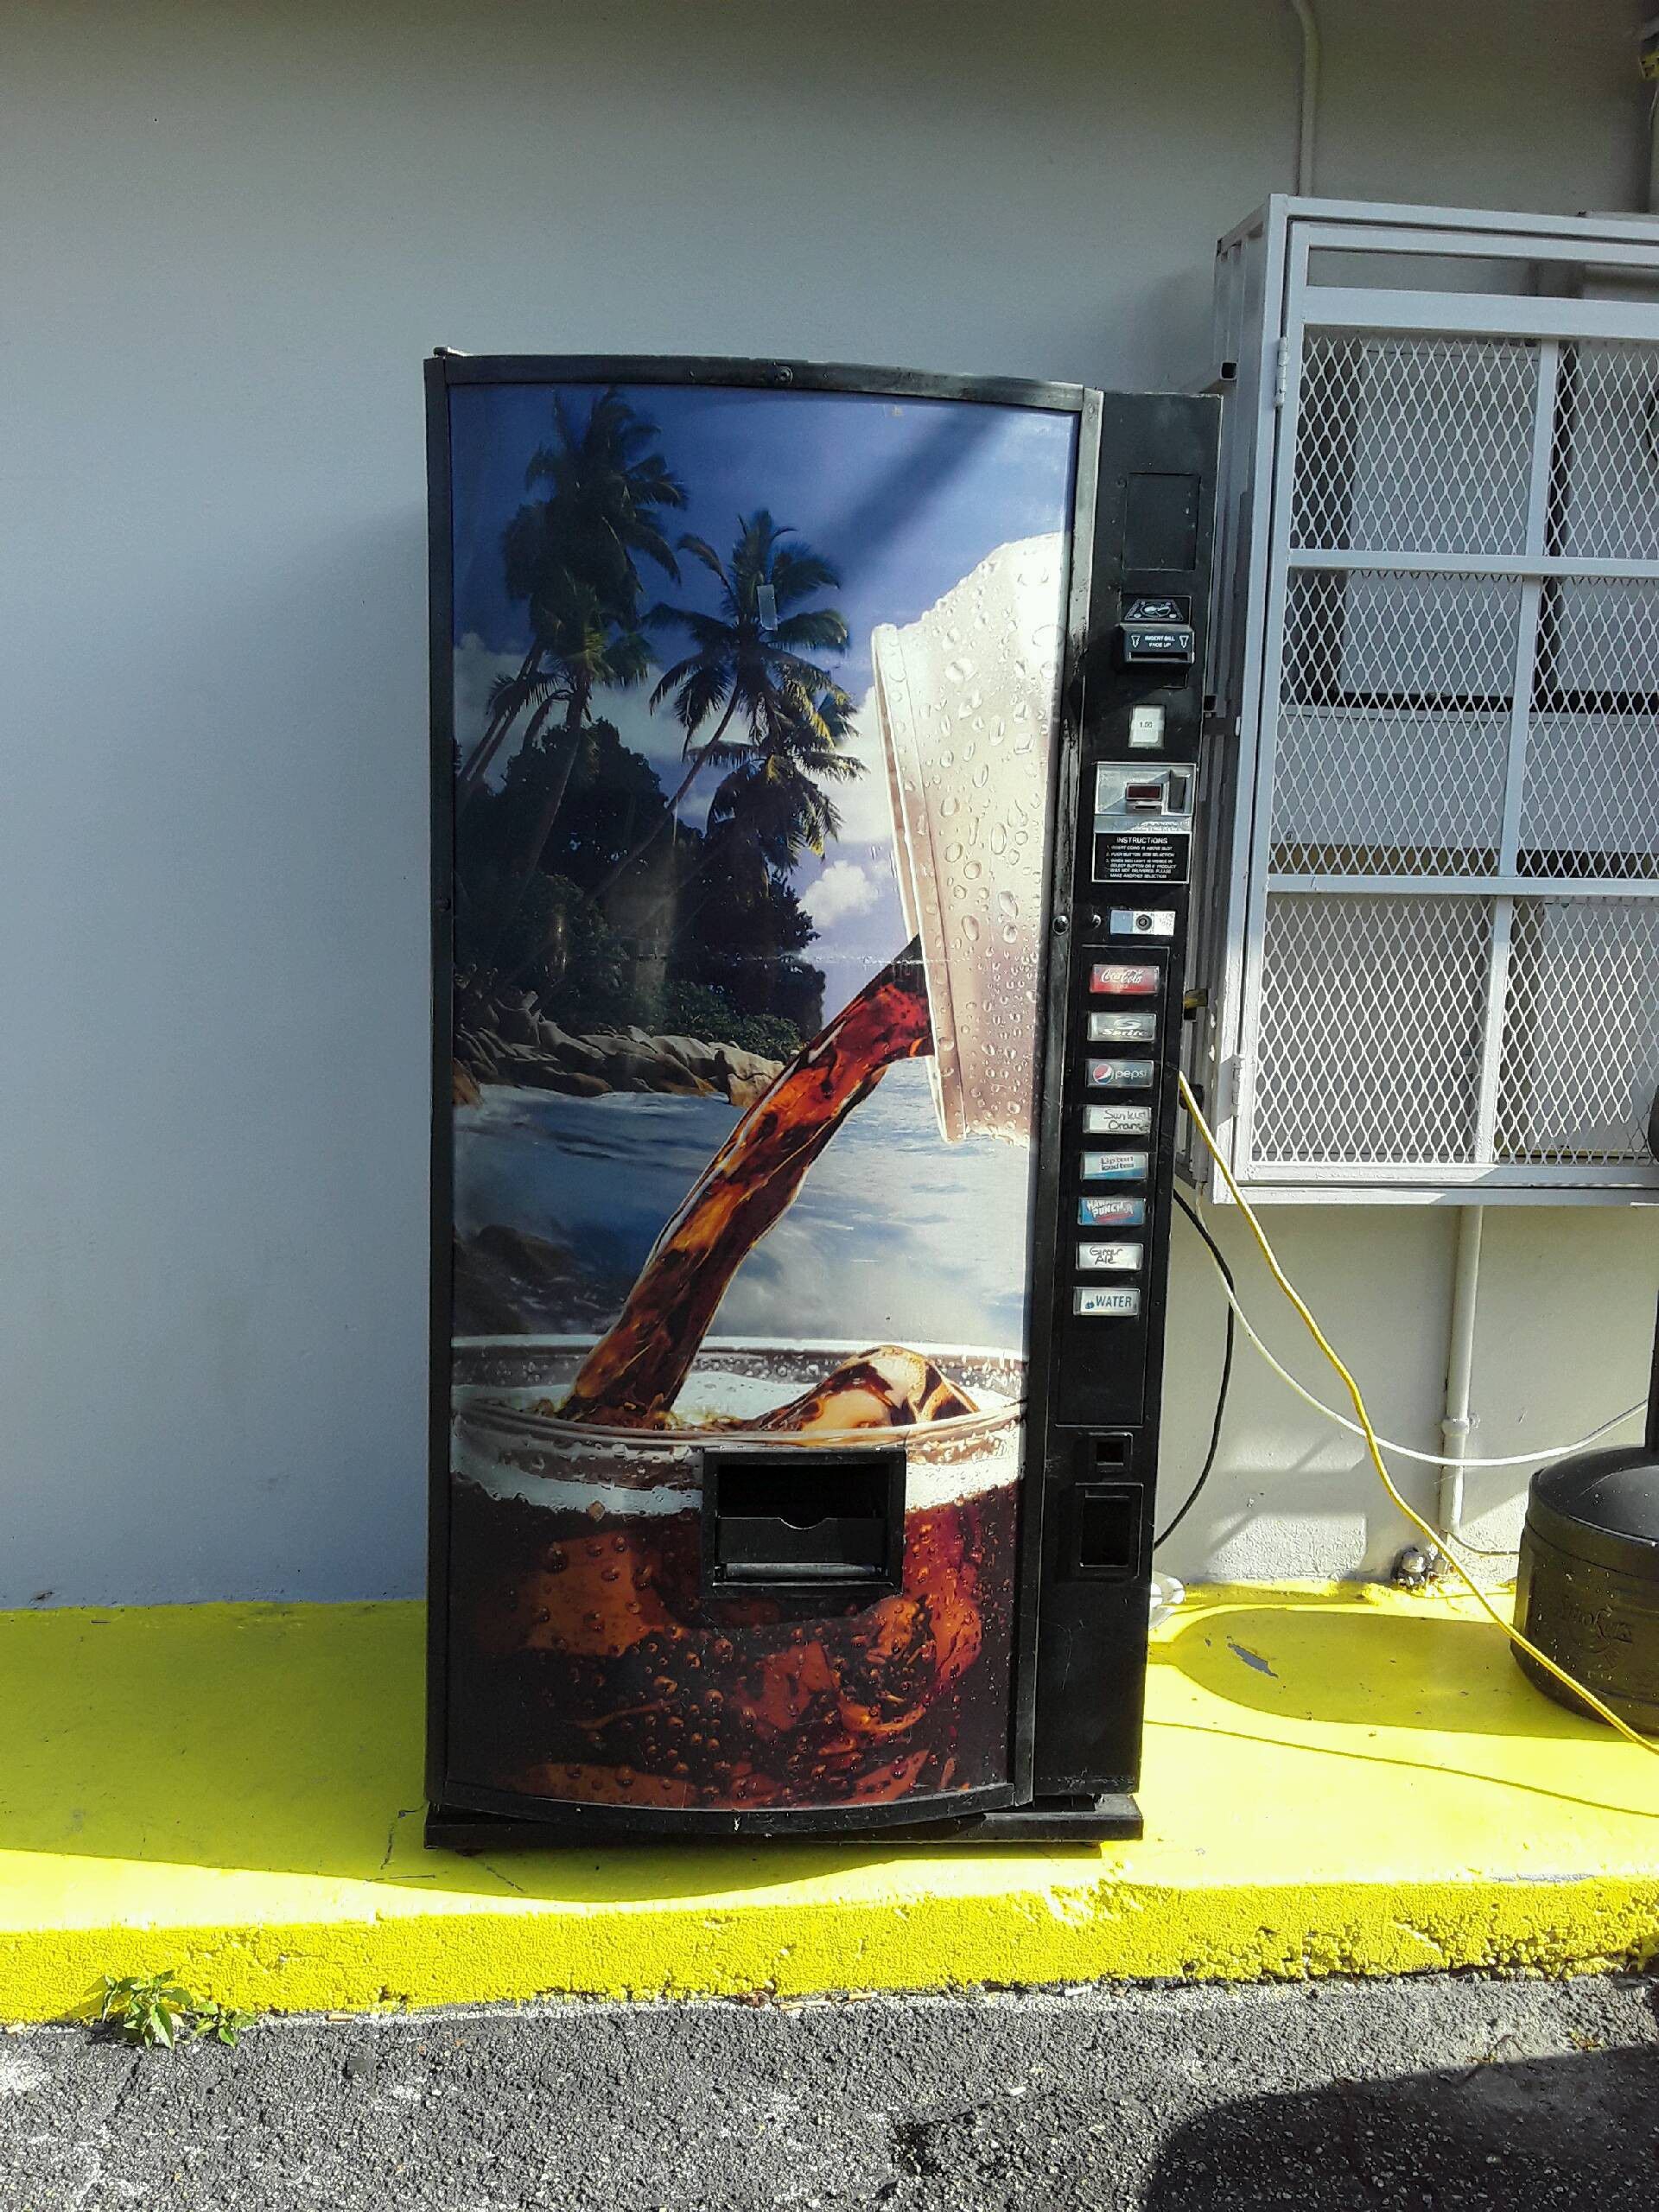 Soda vending machine locations